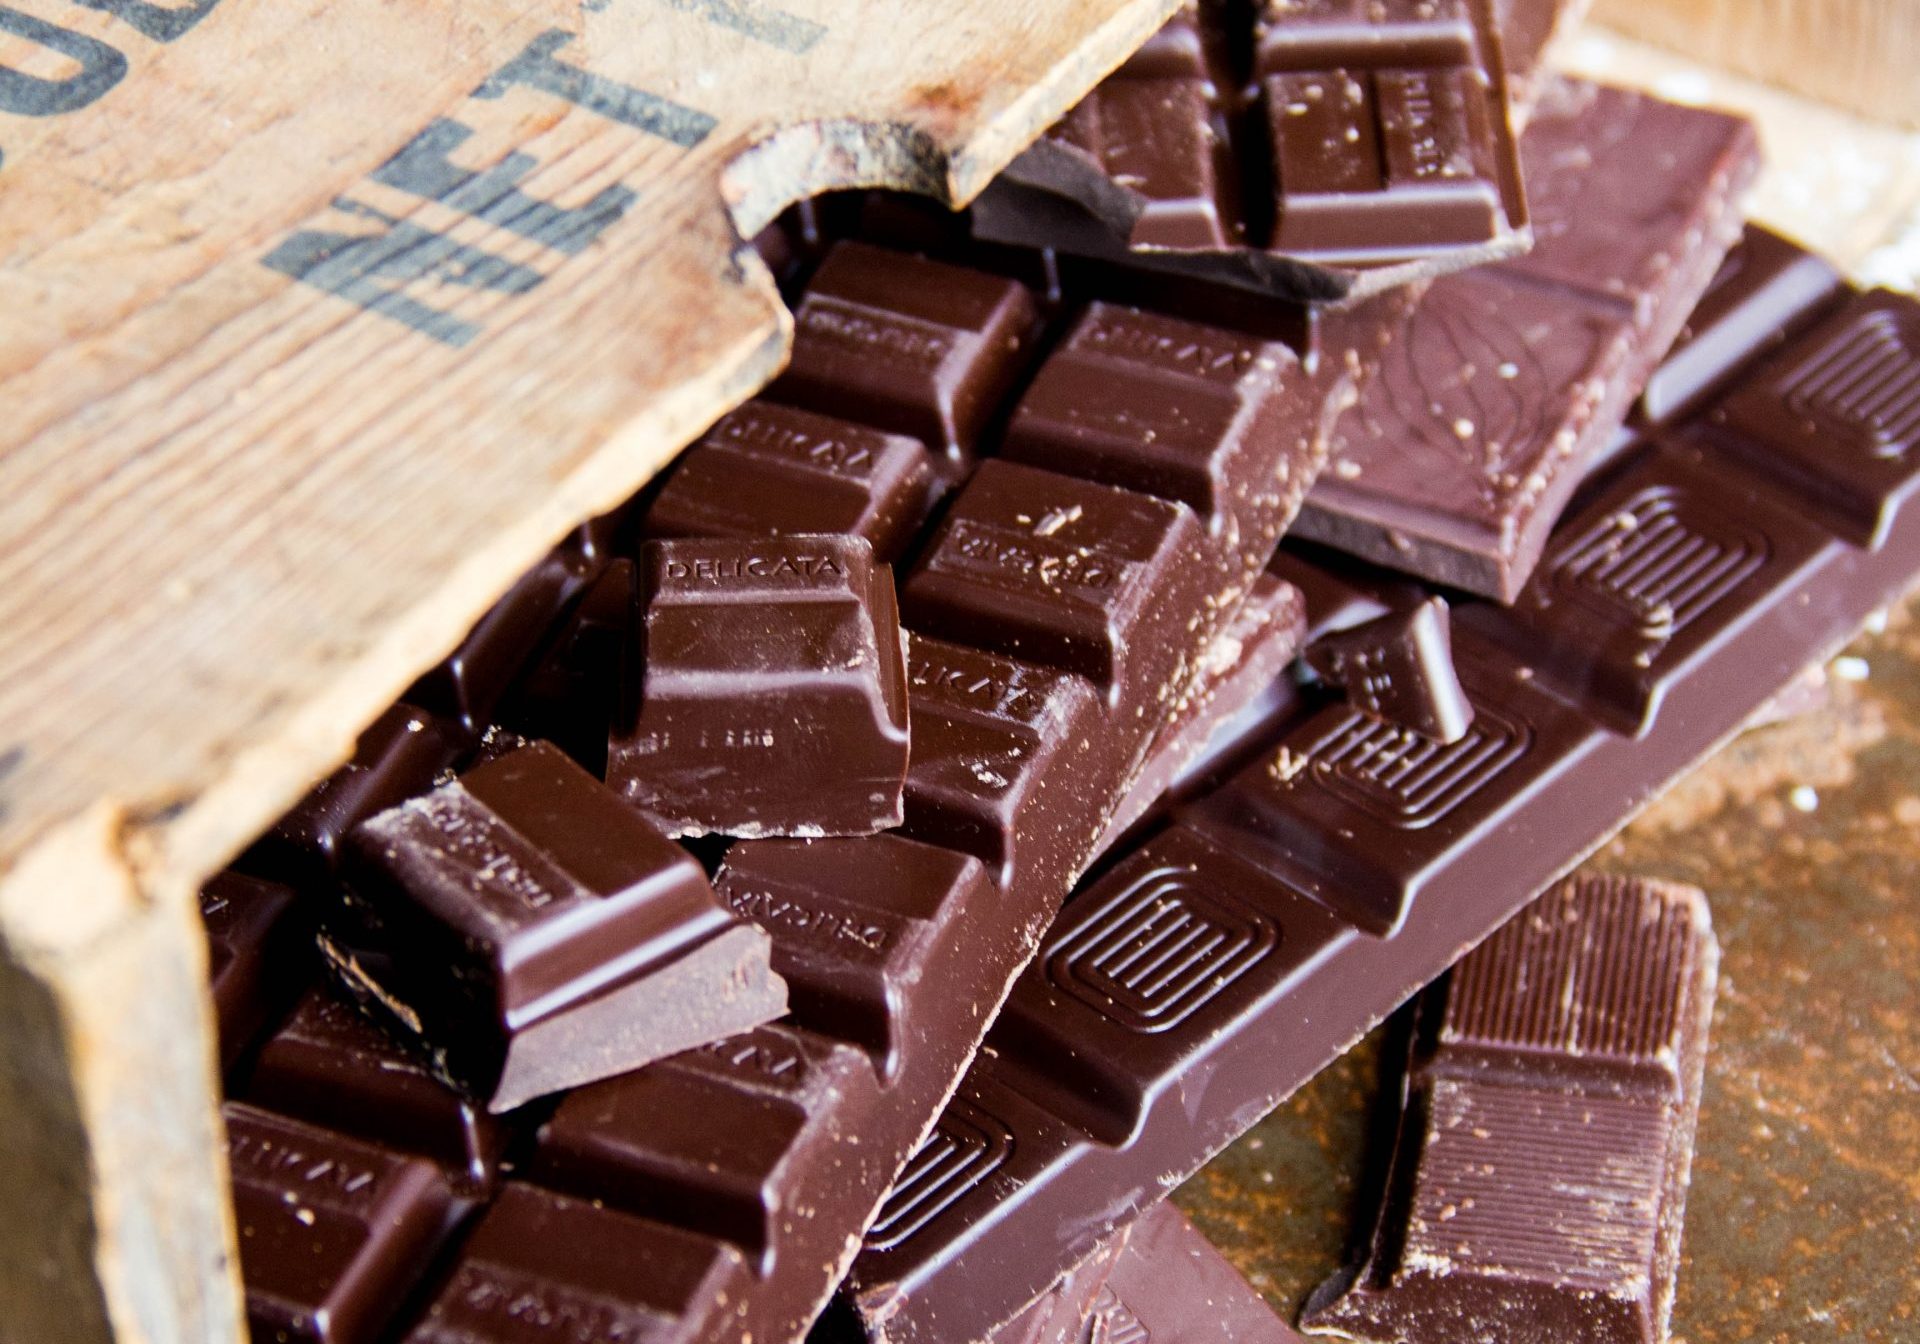 Scelta Taste Accelerator chocolate bars in a wooden crate